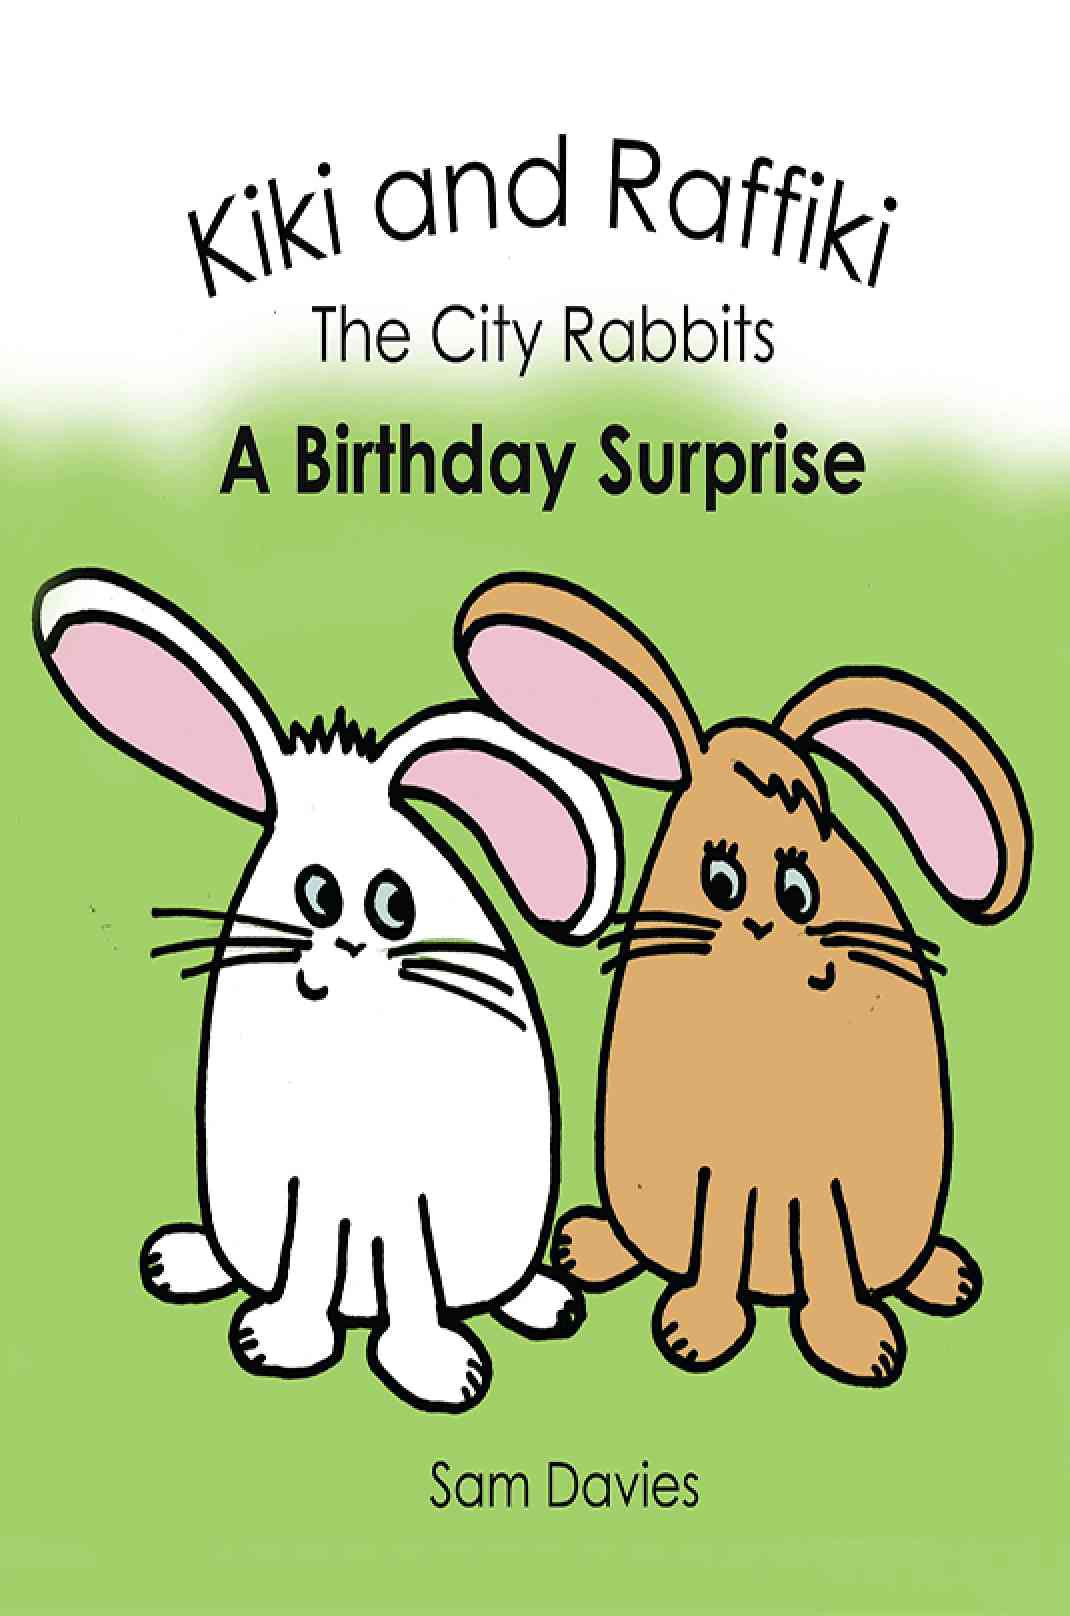 Sam Davies's article in magazine for Kiki and Raffiki the City Rabbits - A Birthday Surprise